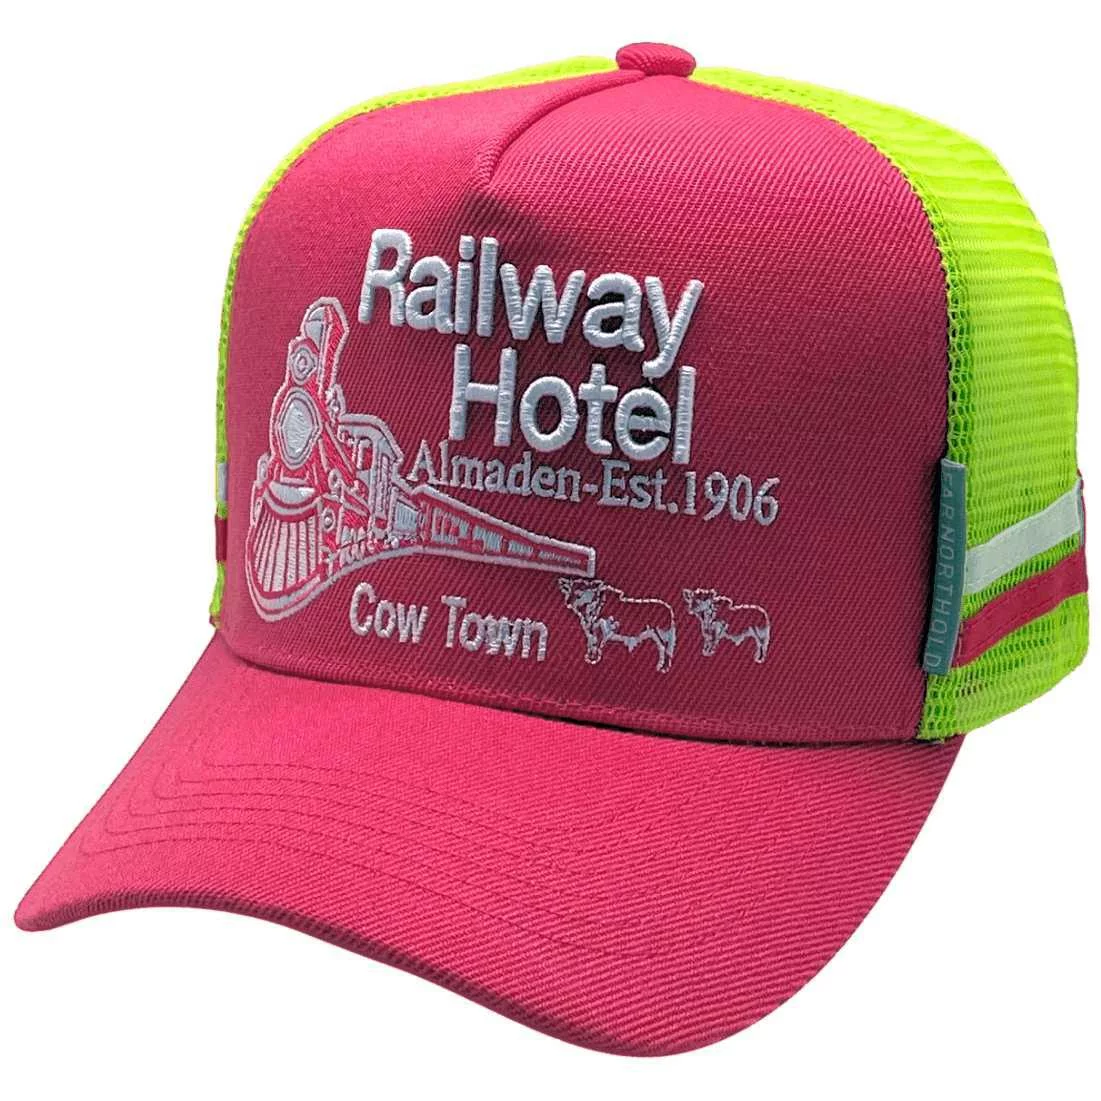 Railway Hotel Almaden QLD HP Original Midrange Aussie Trucker Hat with double side bands Acrylic Hot Pink florescent green